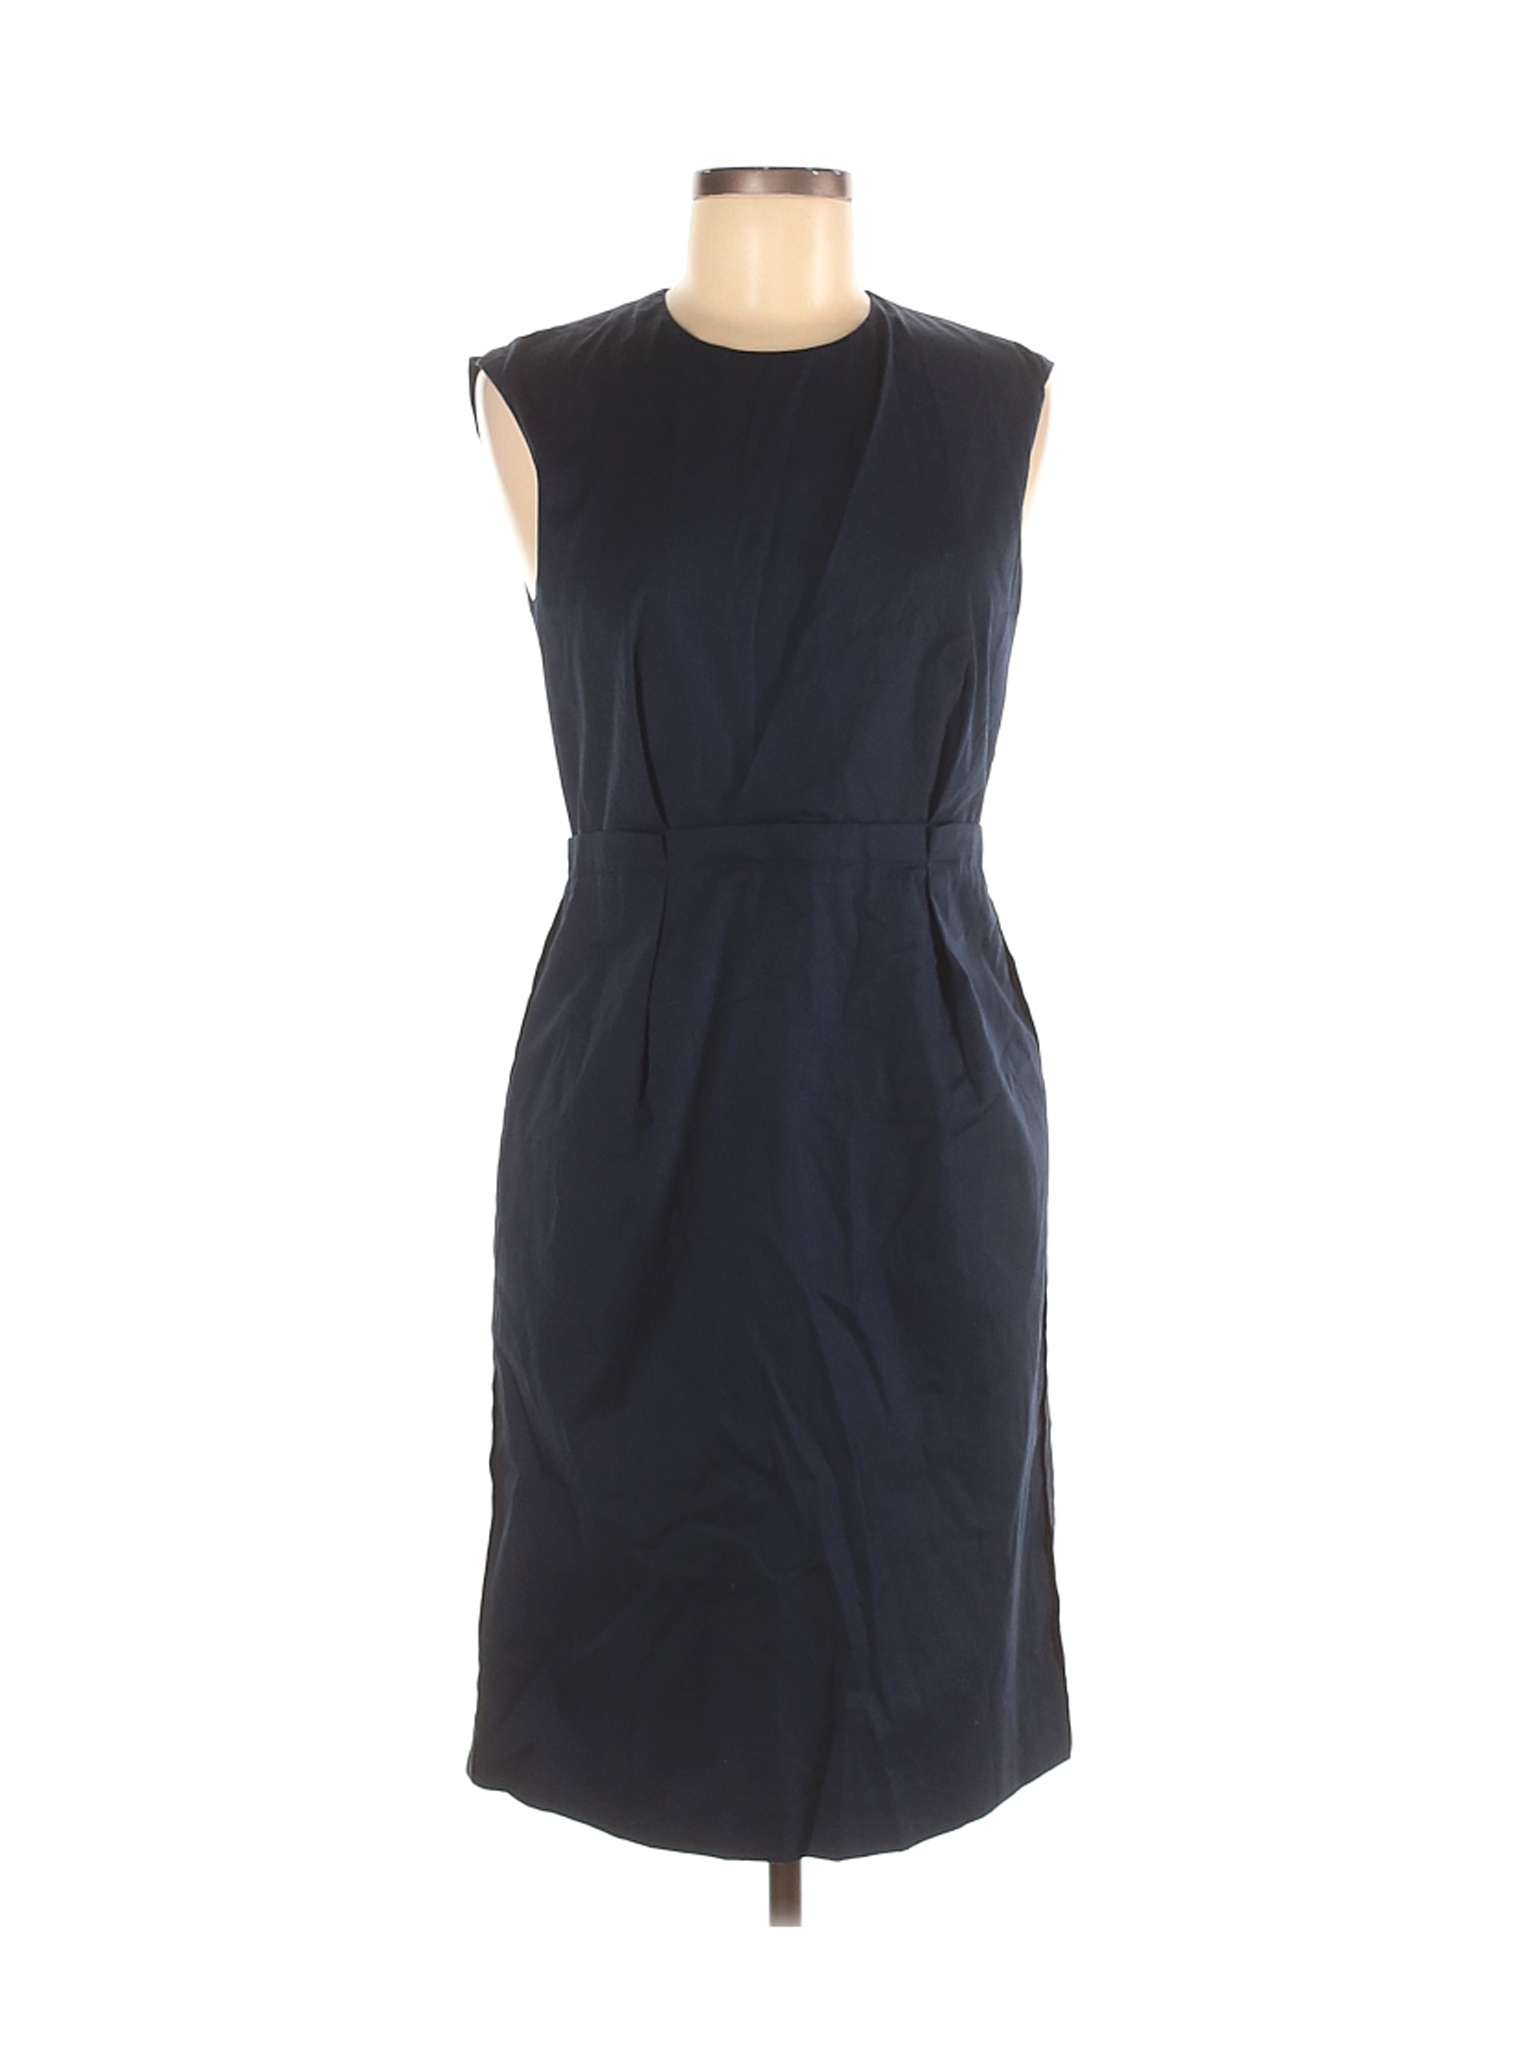 Tara Jarmon Women Black Casual Dress 38 eur | eBay